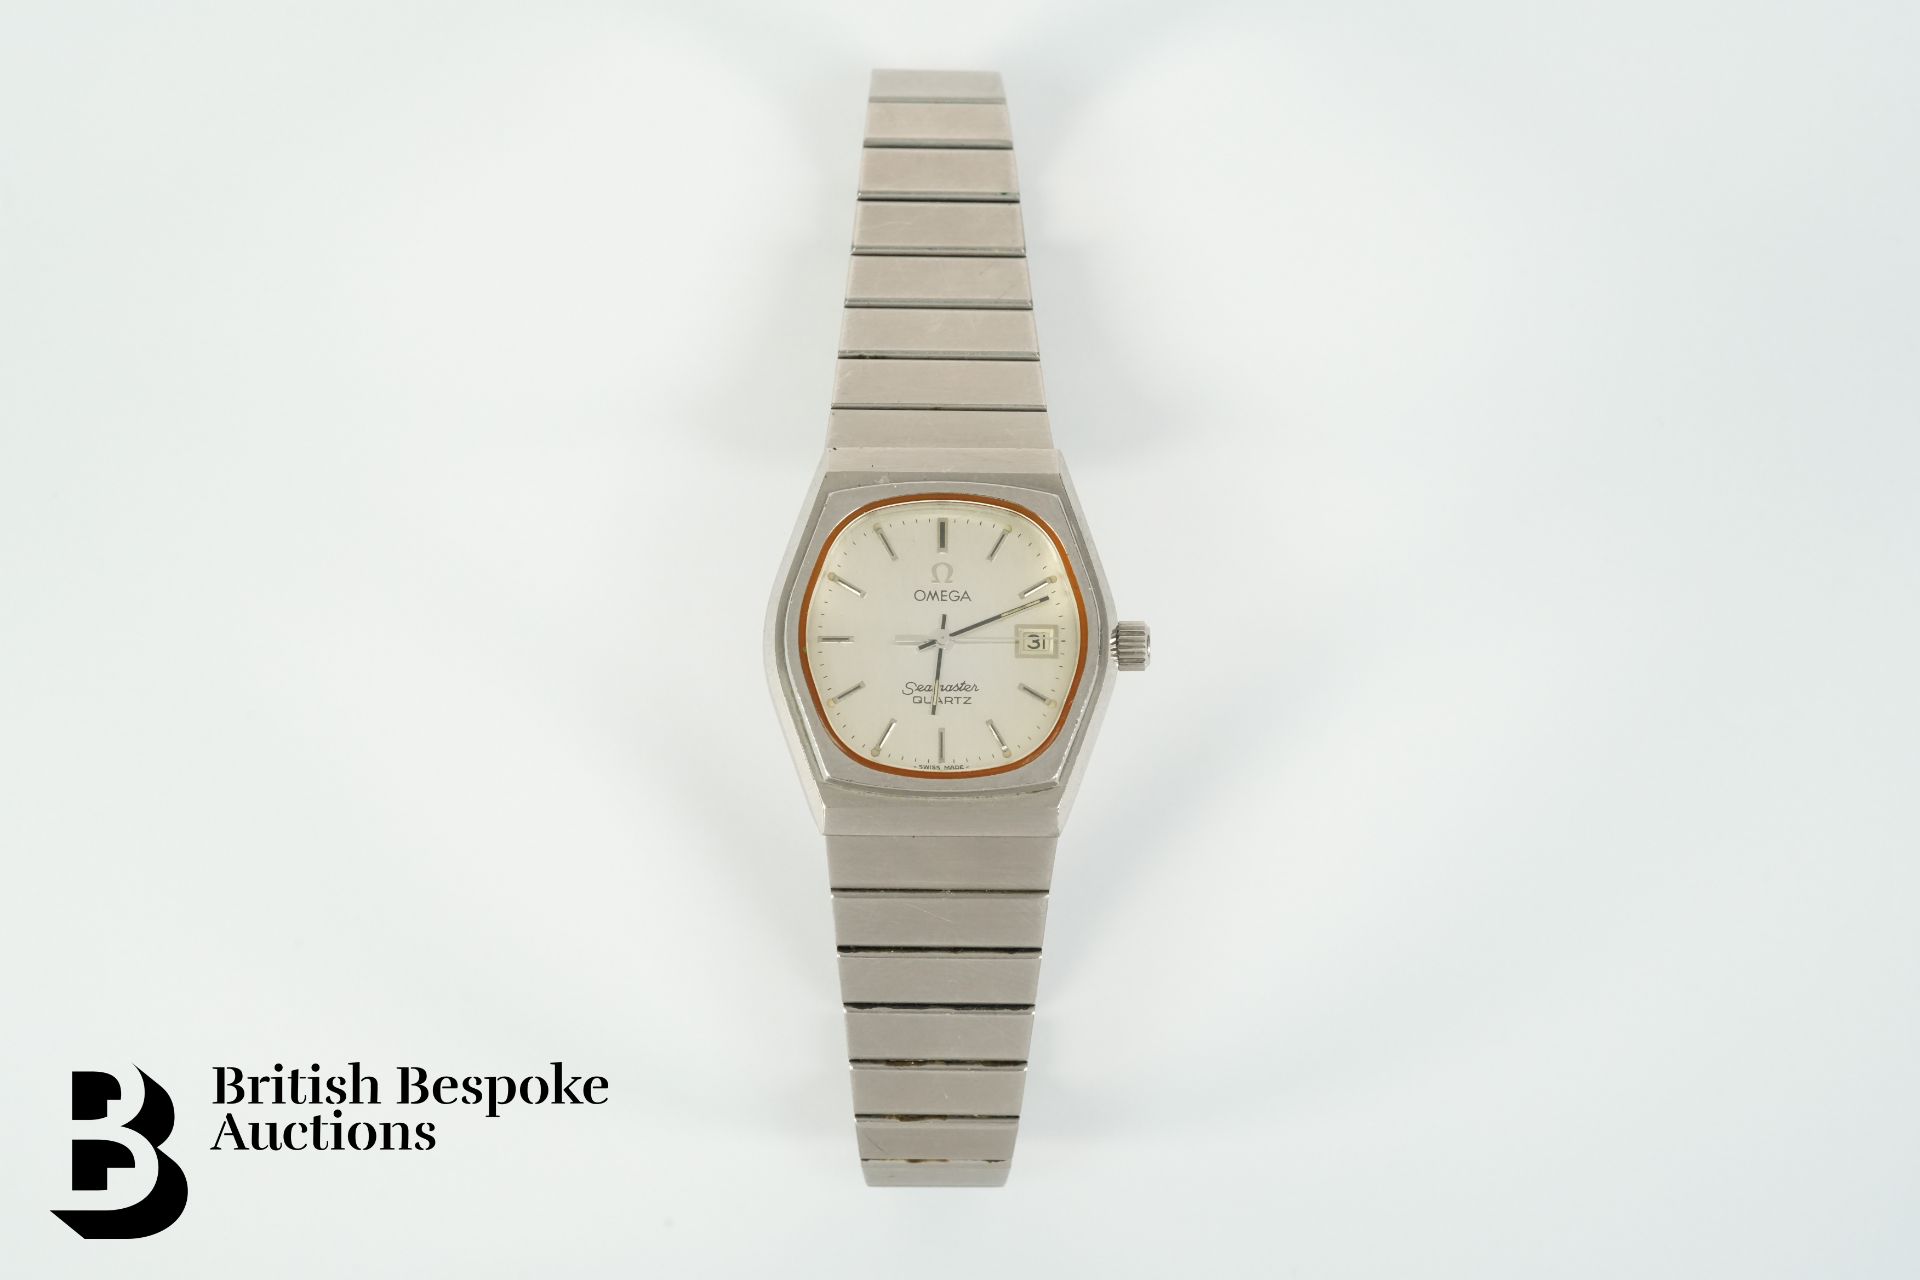 Lady's Omega Wrist Watch - Image 4 of 5